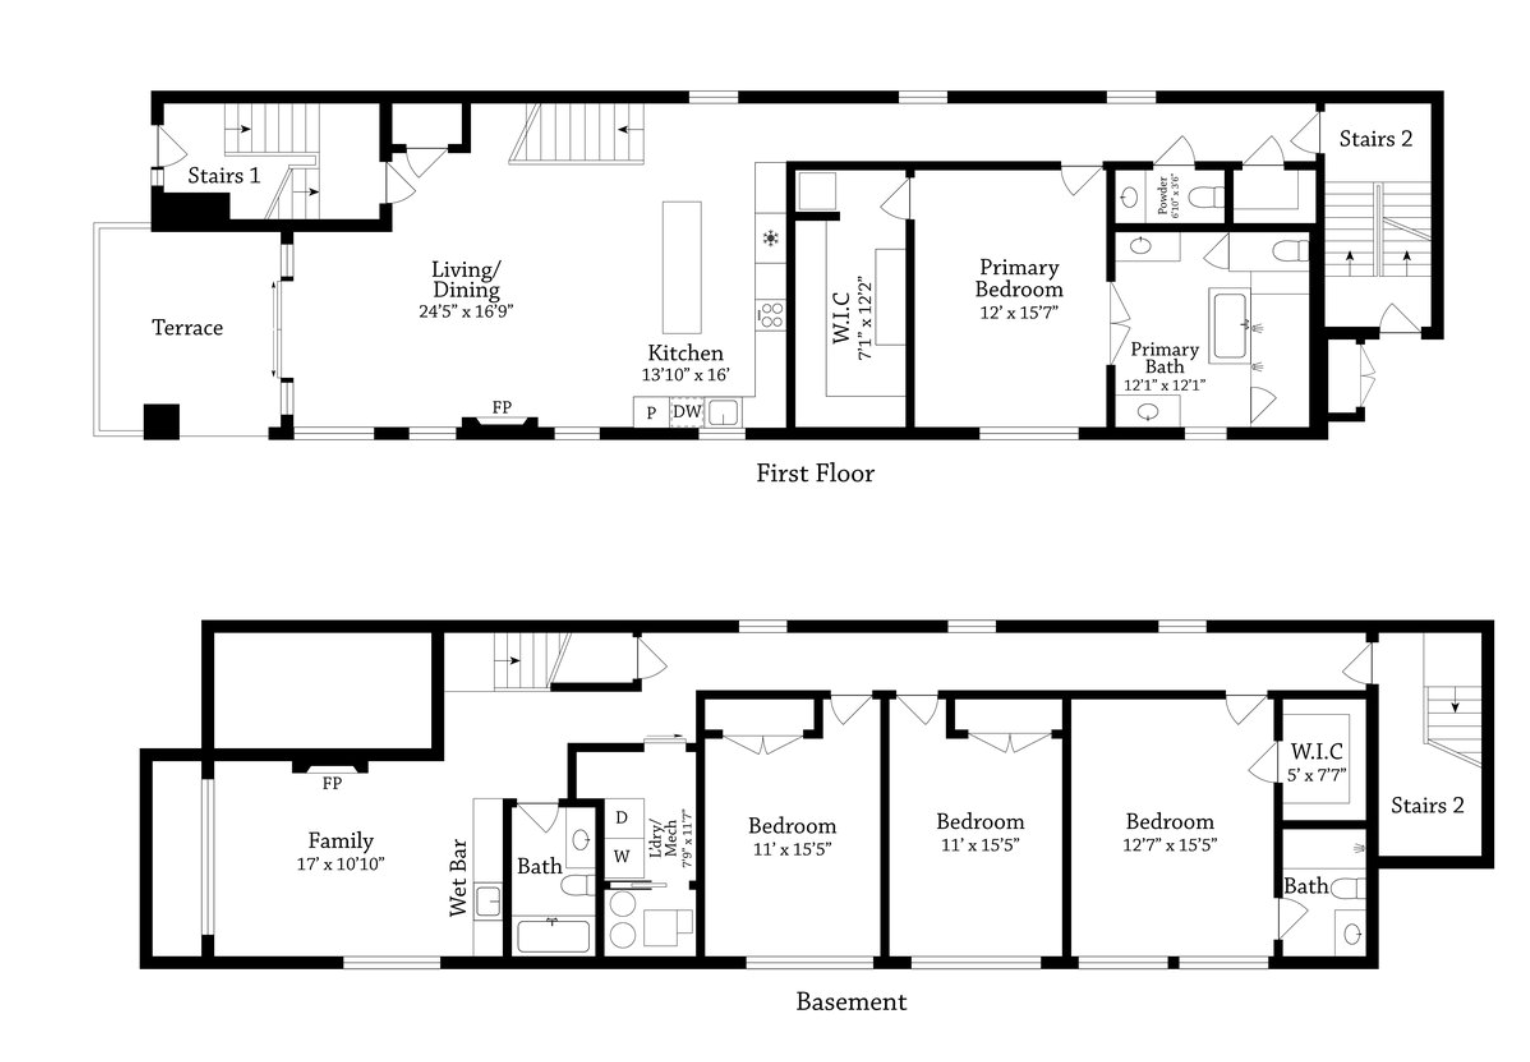 Bottom duplex floor plans via Property People